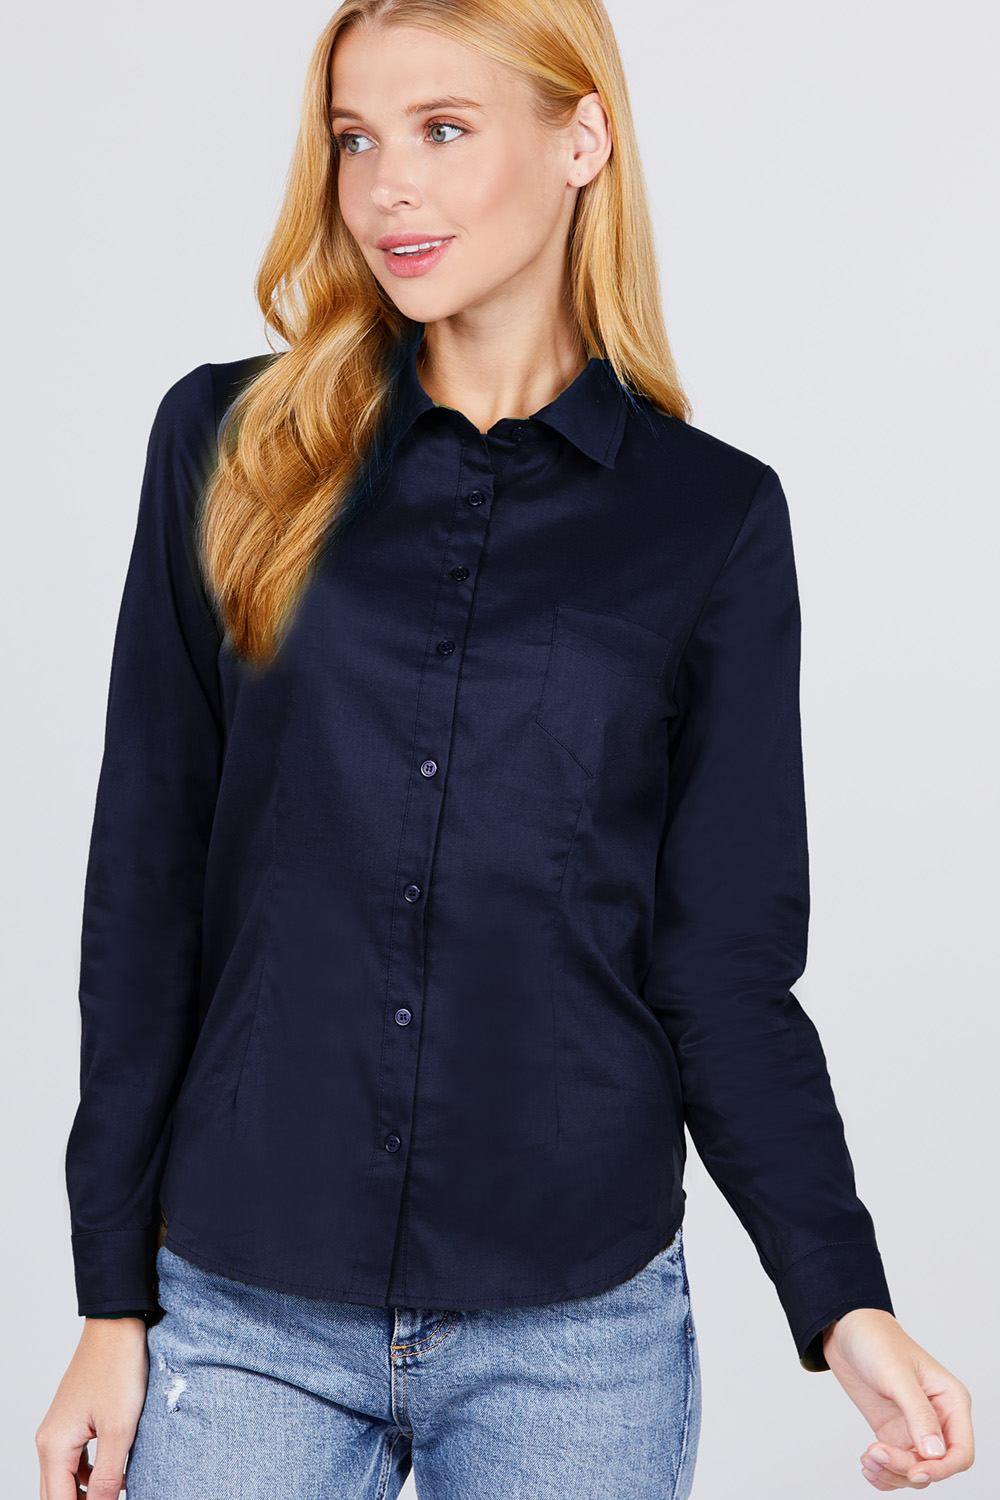 Button Down Woven Shirts - Pearlara